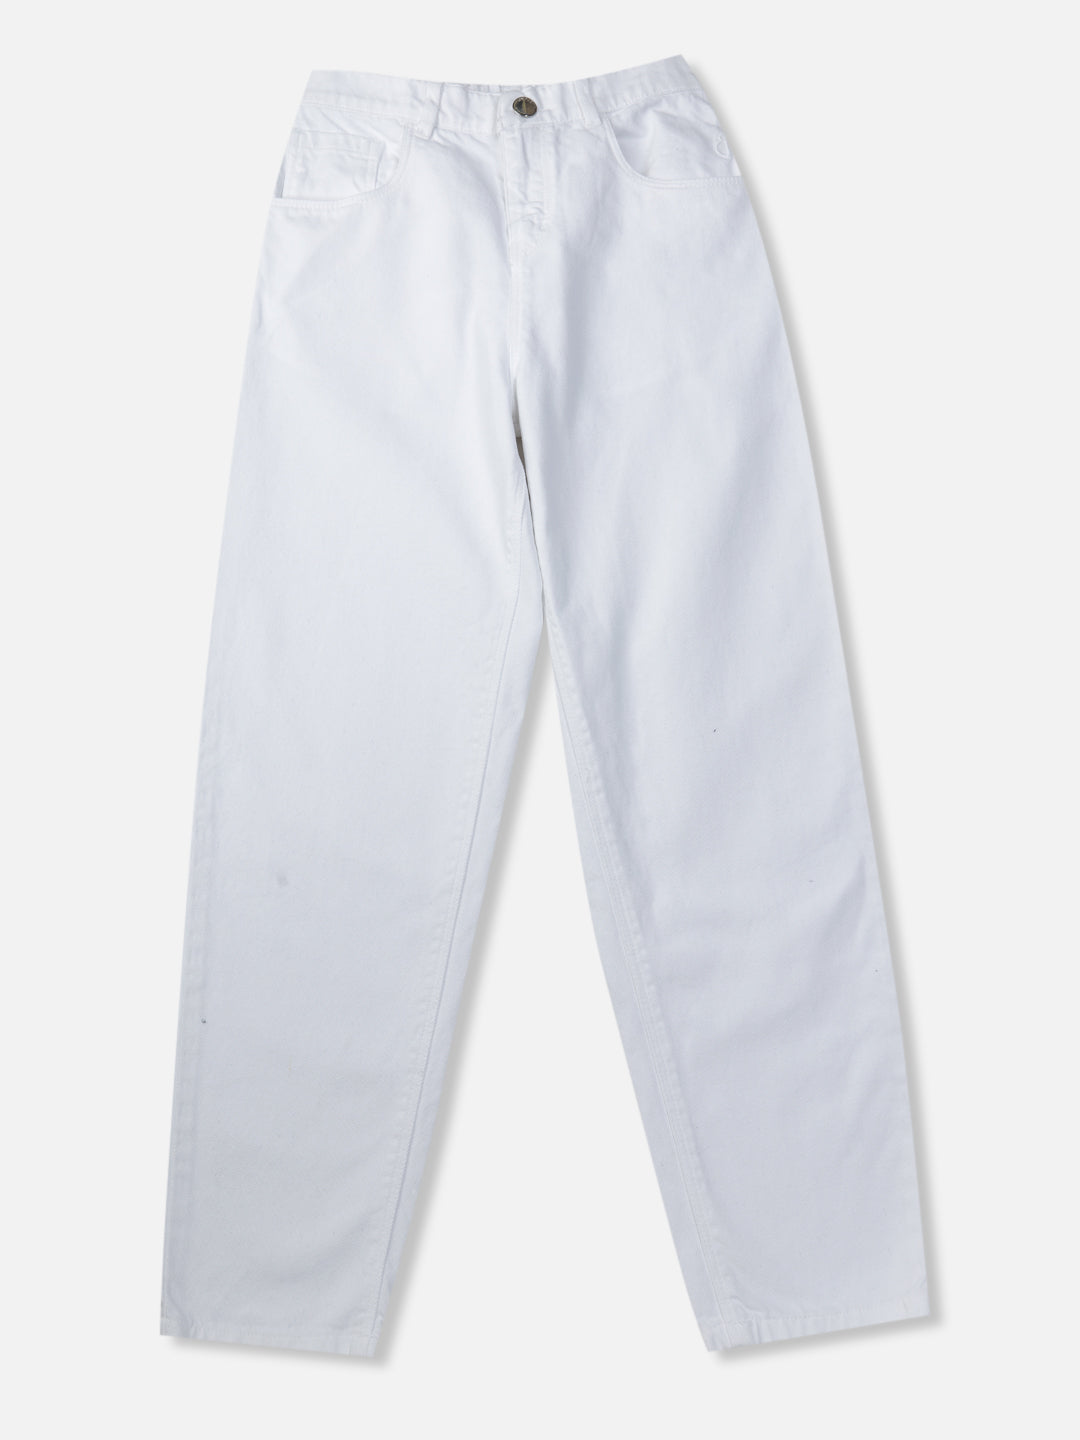 Girls White Solid Denim Jeans